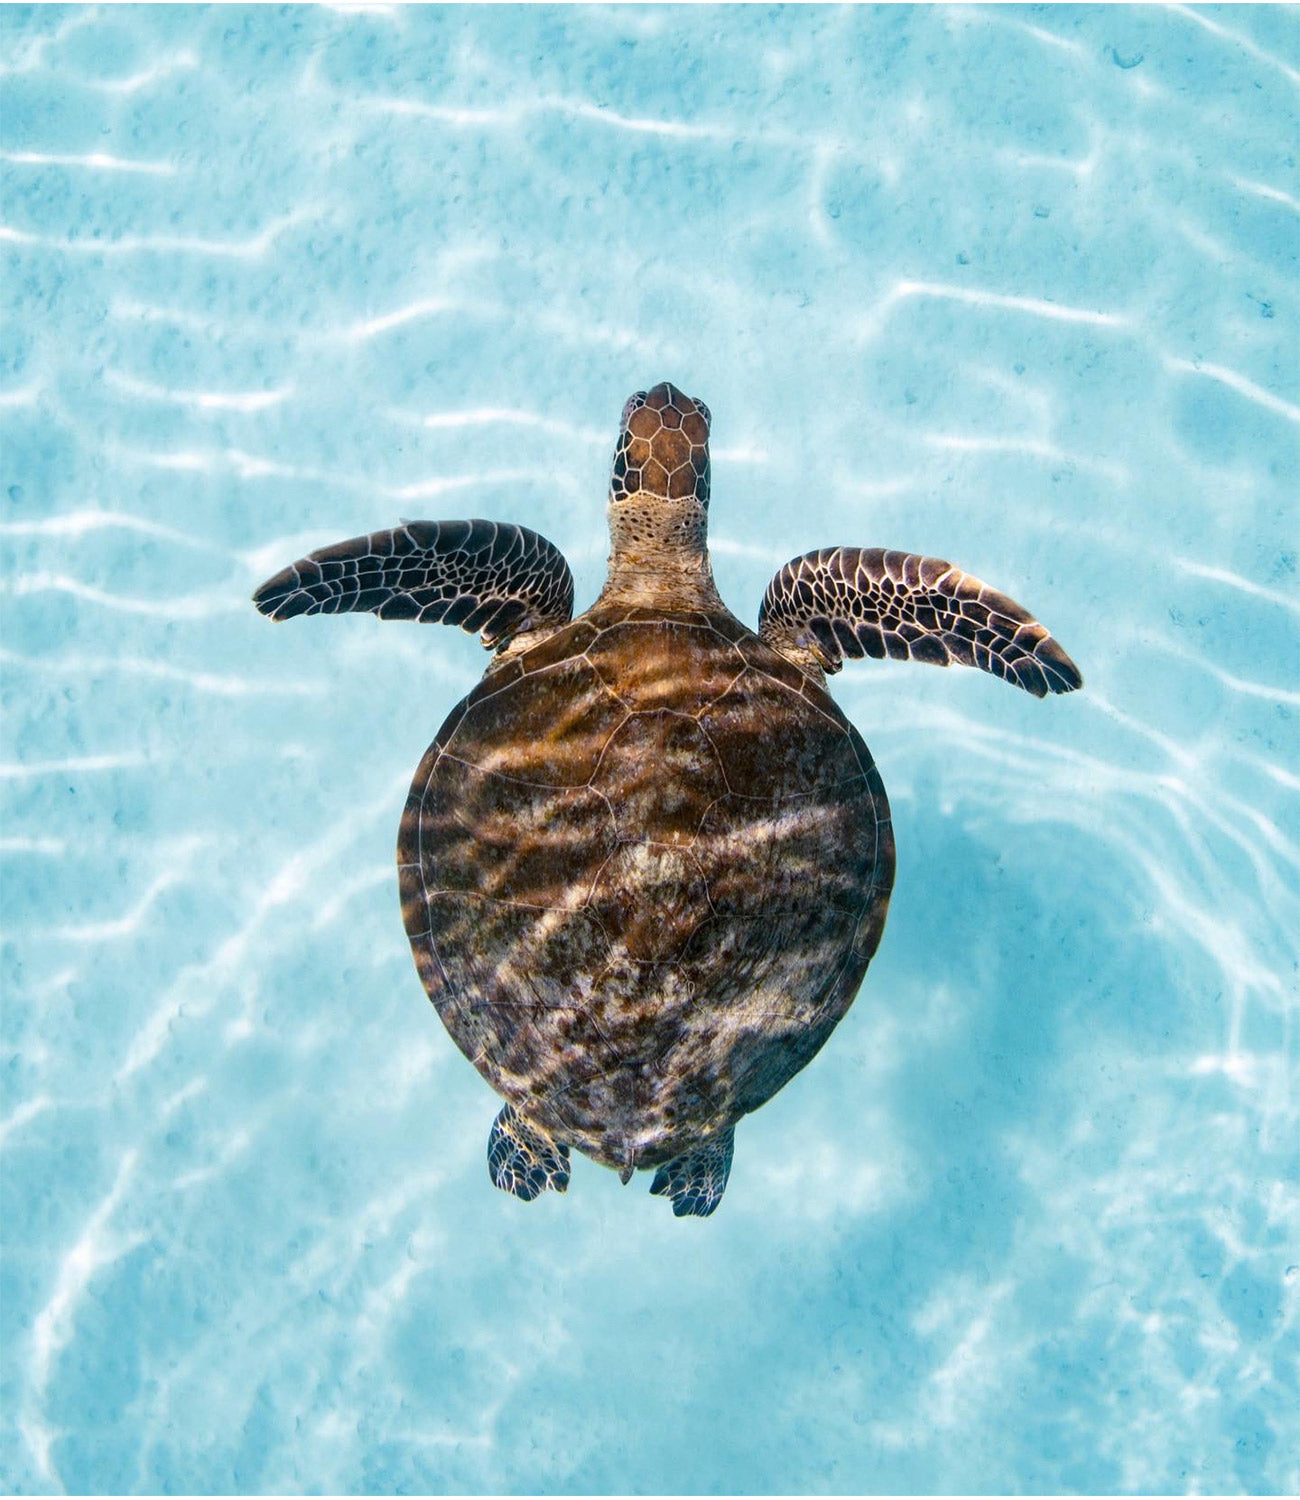 Greenback turtle shot by Environmental Science Student and underwater photographer Tarni for Arnhem Byron Bay